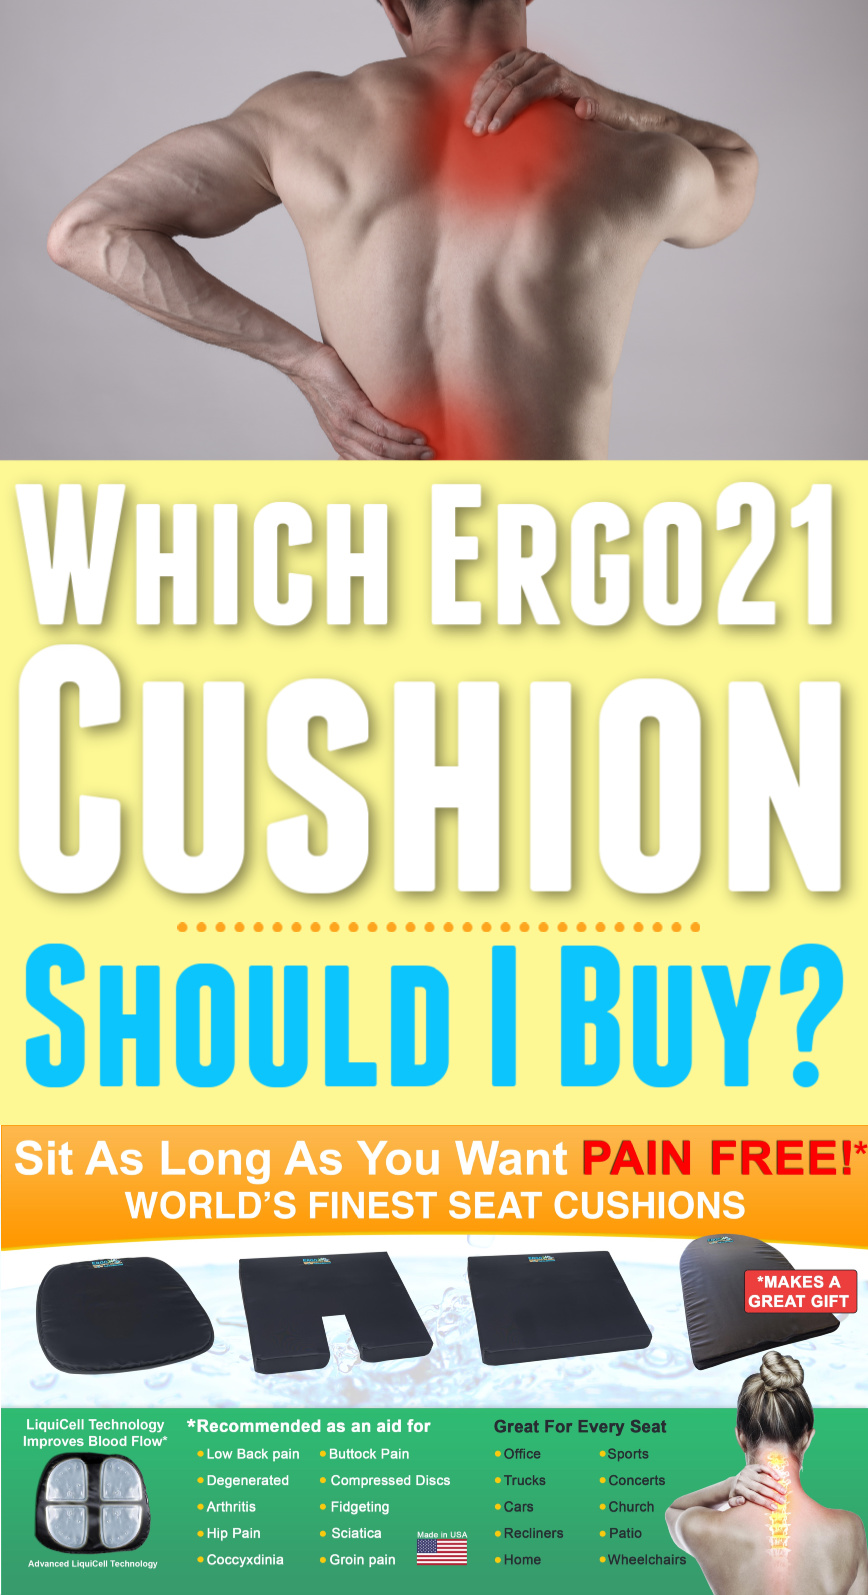 https://www.ergo21.com/wp-content/uploads/2020/06/Ergo21-Pin-Image-Which-Cushion-Should-I-Buy.jpg